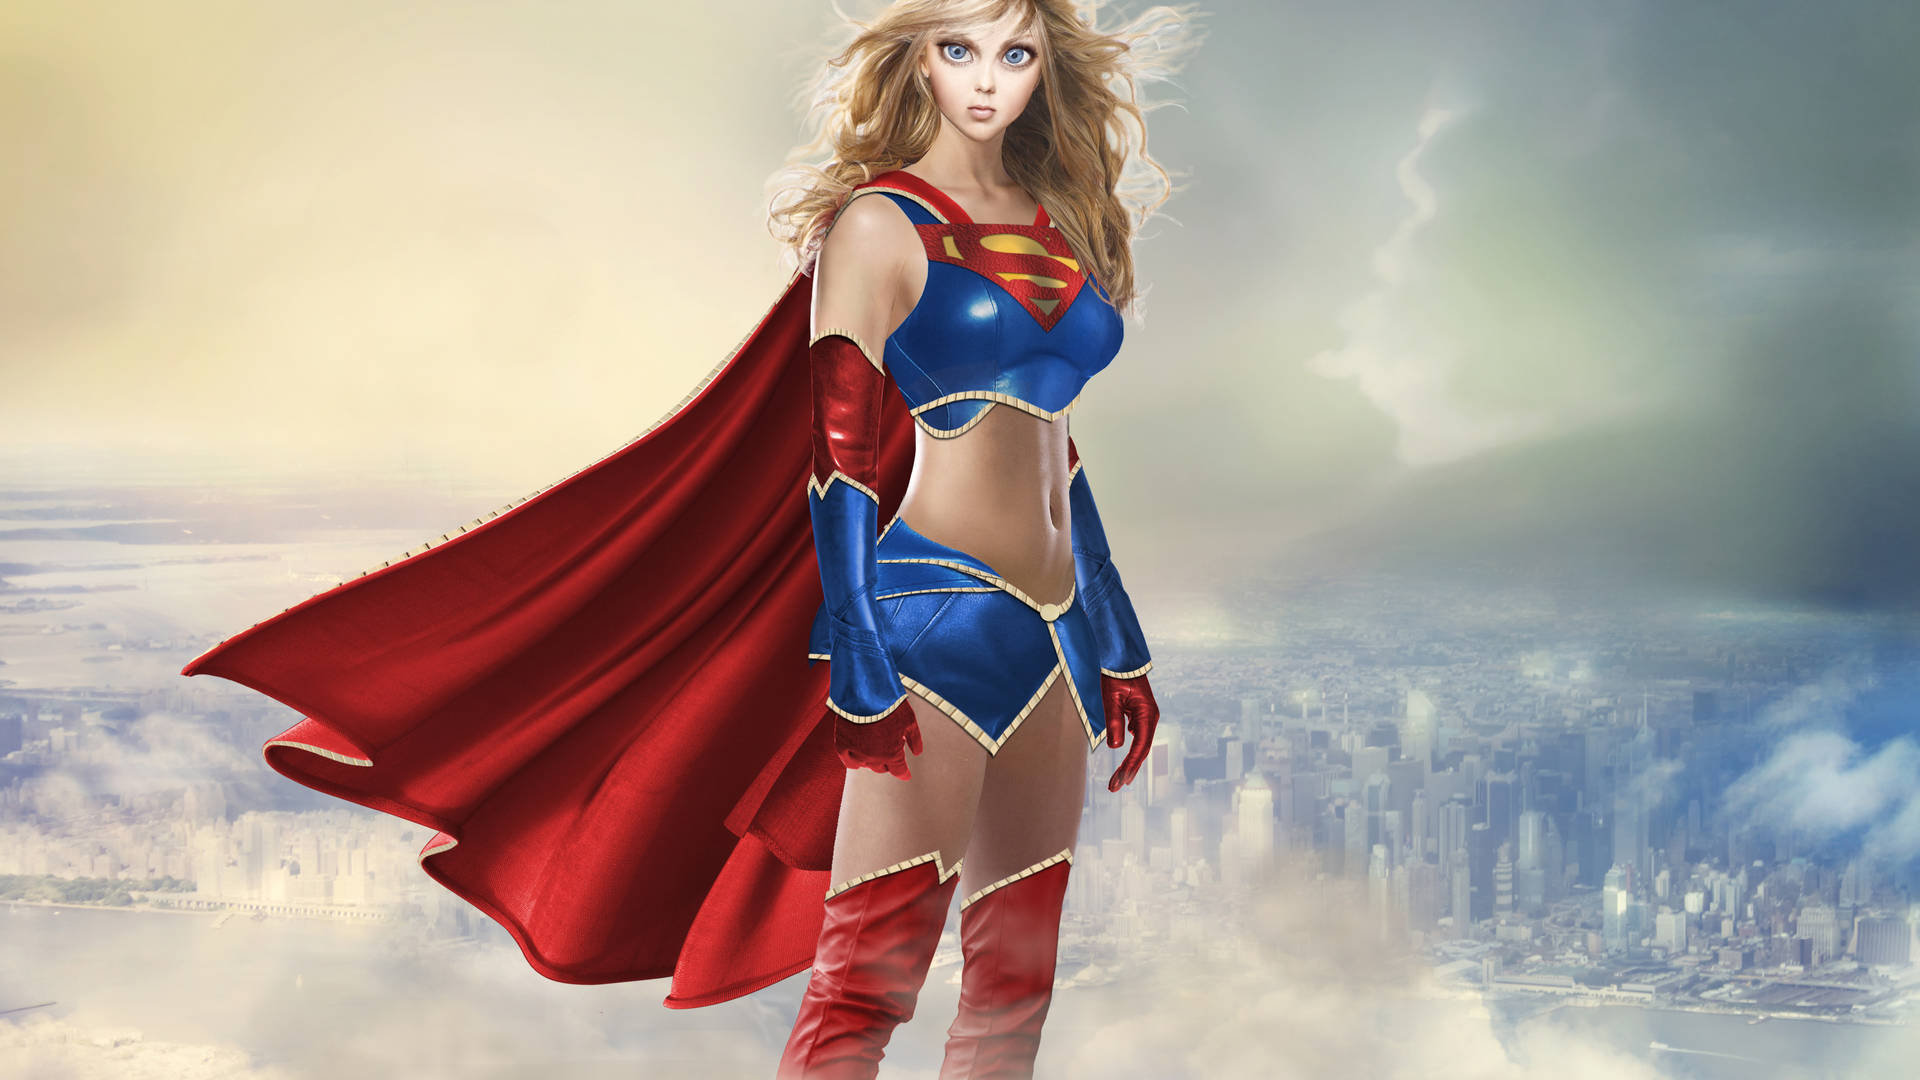 Supergirl In Misty City Wallpaper